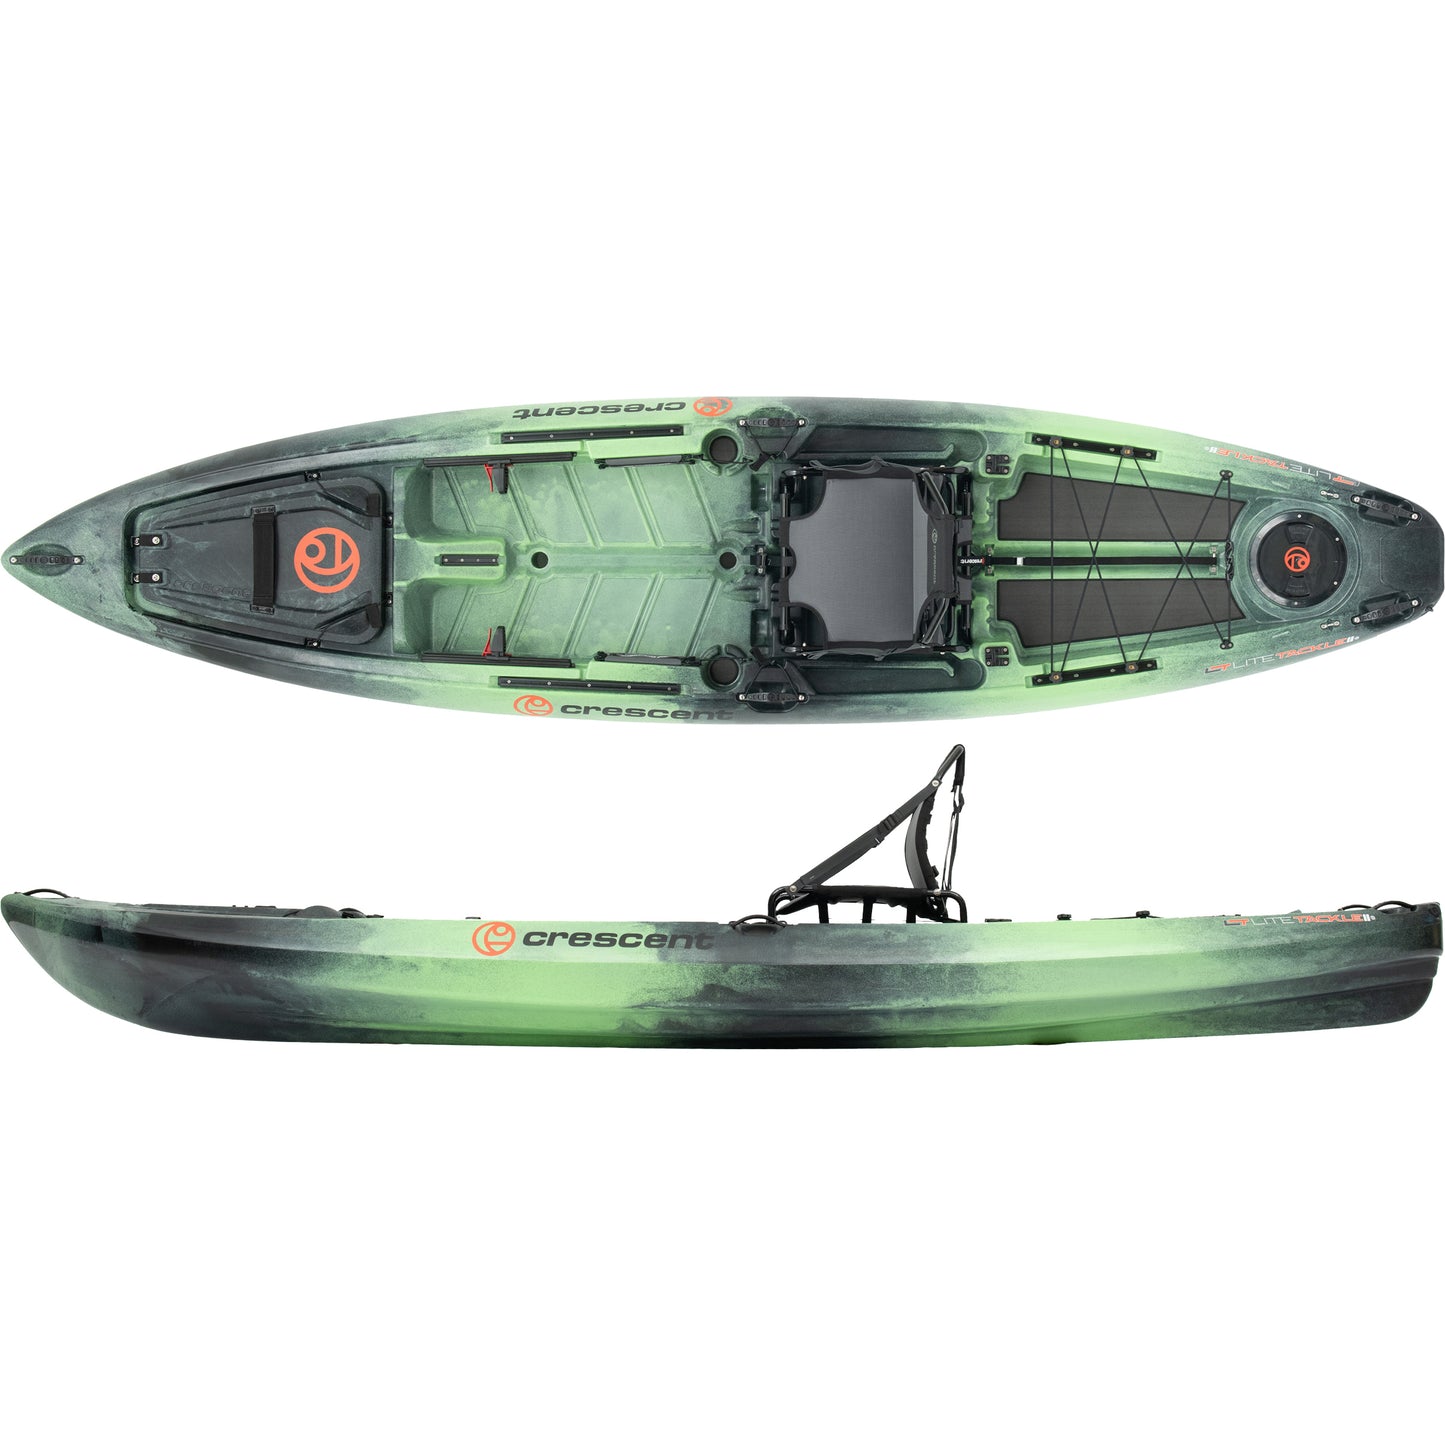 Custom Crescent LiteTackle 2 Fishing Kayak with Torqeedo 3HP Motor